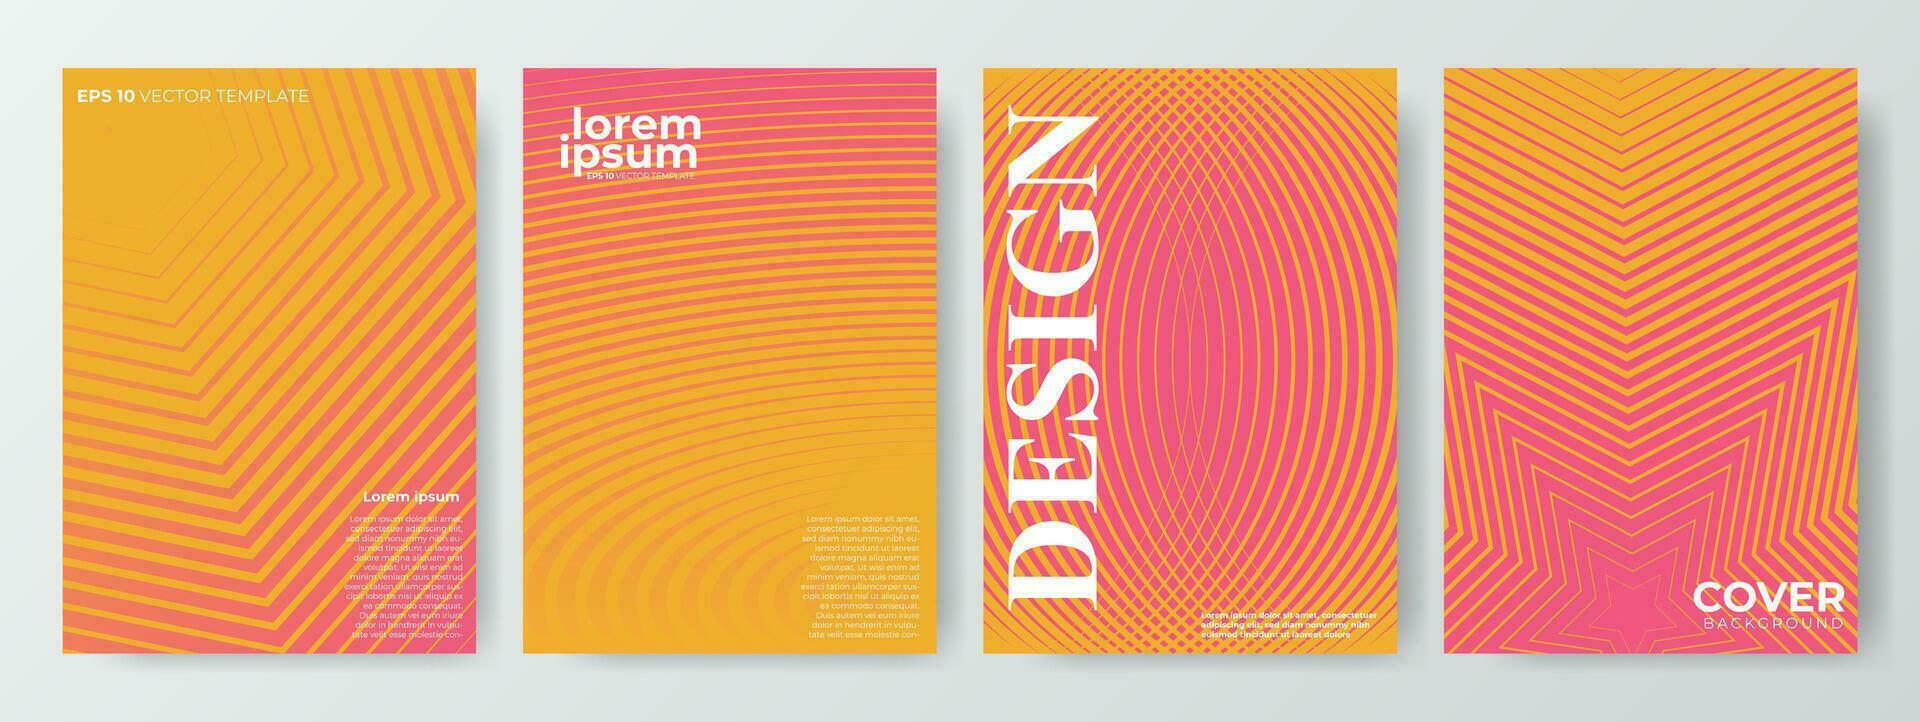 minimalist cover design template.  Halftone gradation on a minimalist cover design. vector